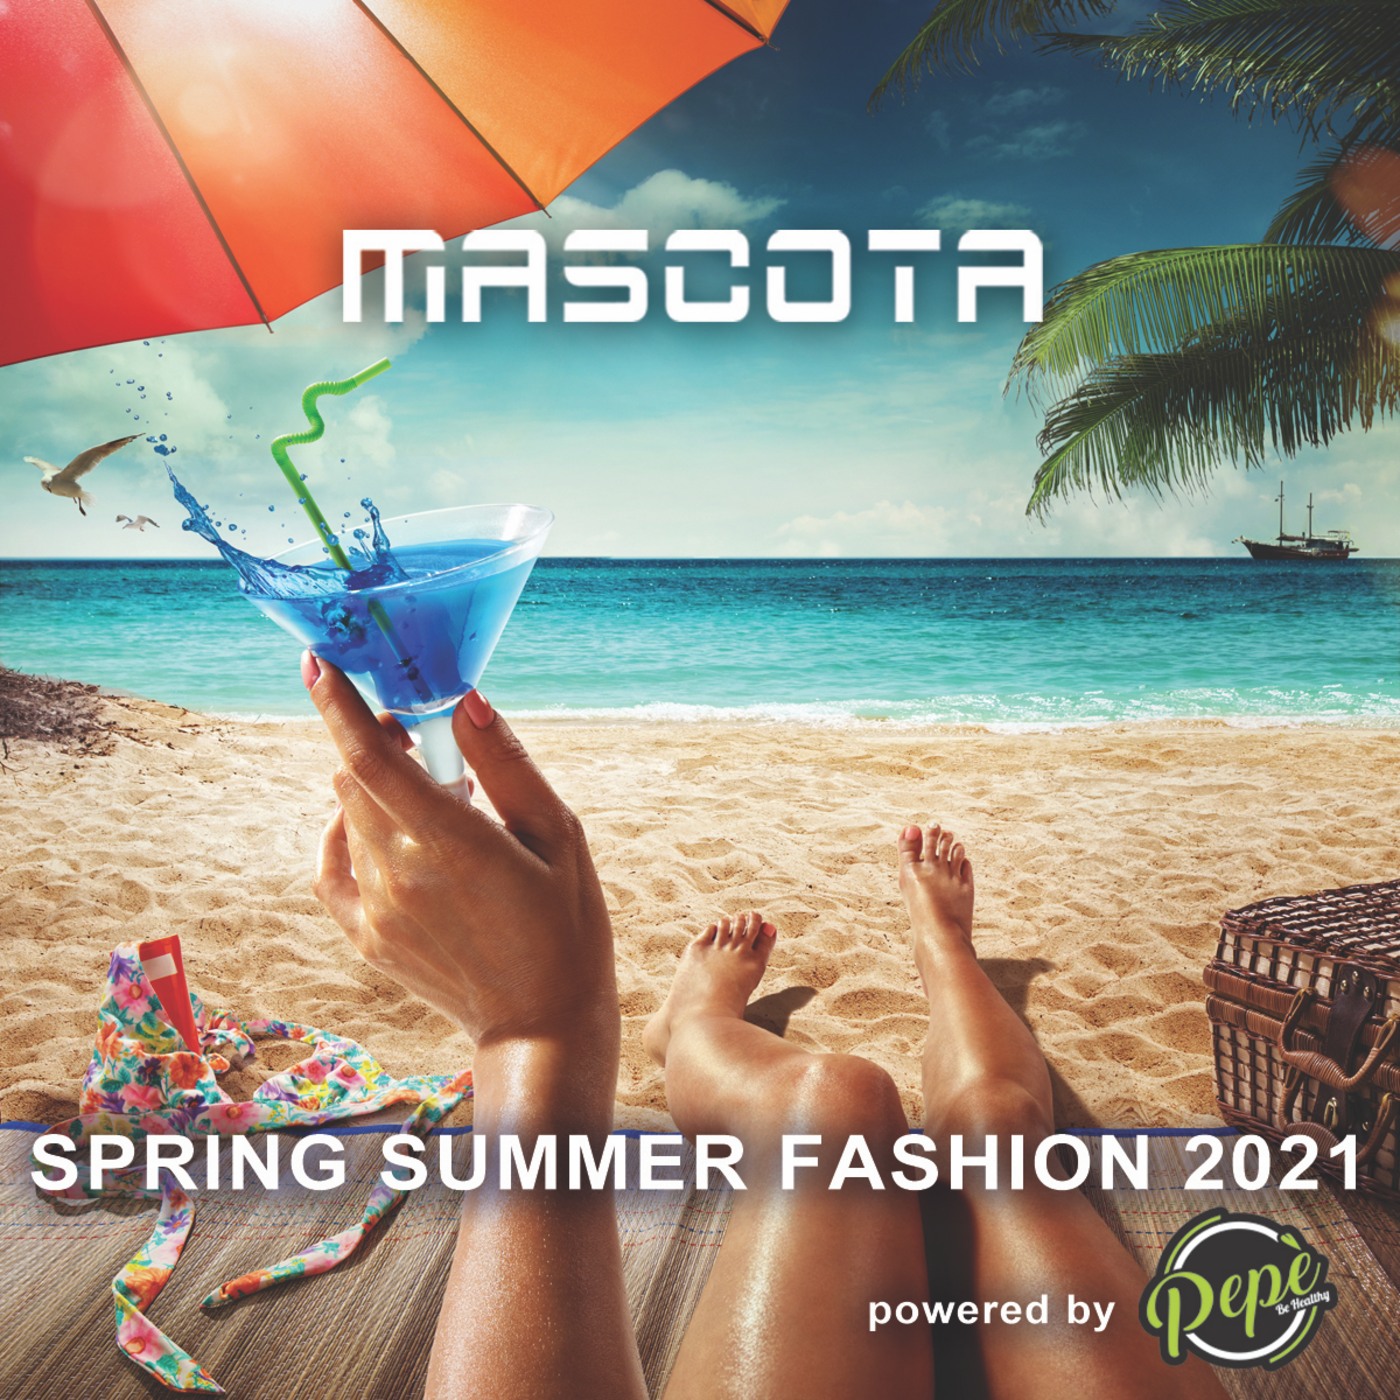 Episode 56: #56 Mascota - Spring Summer Fashion 2021